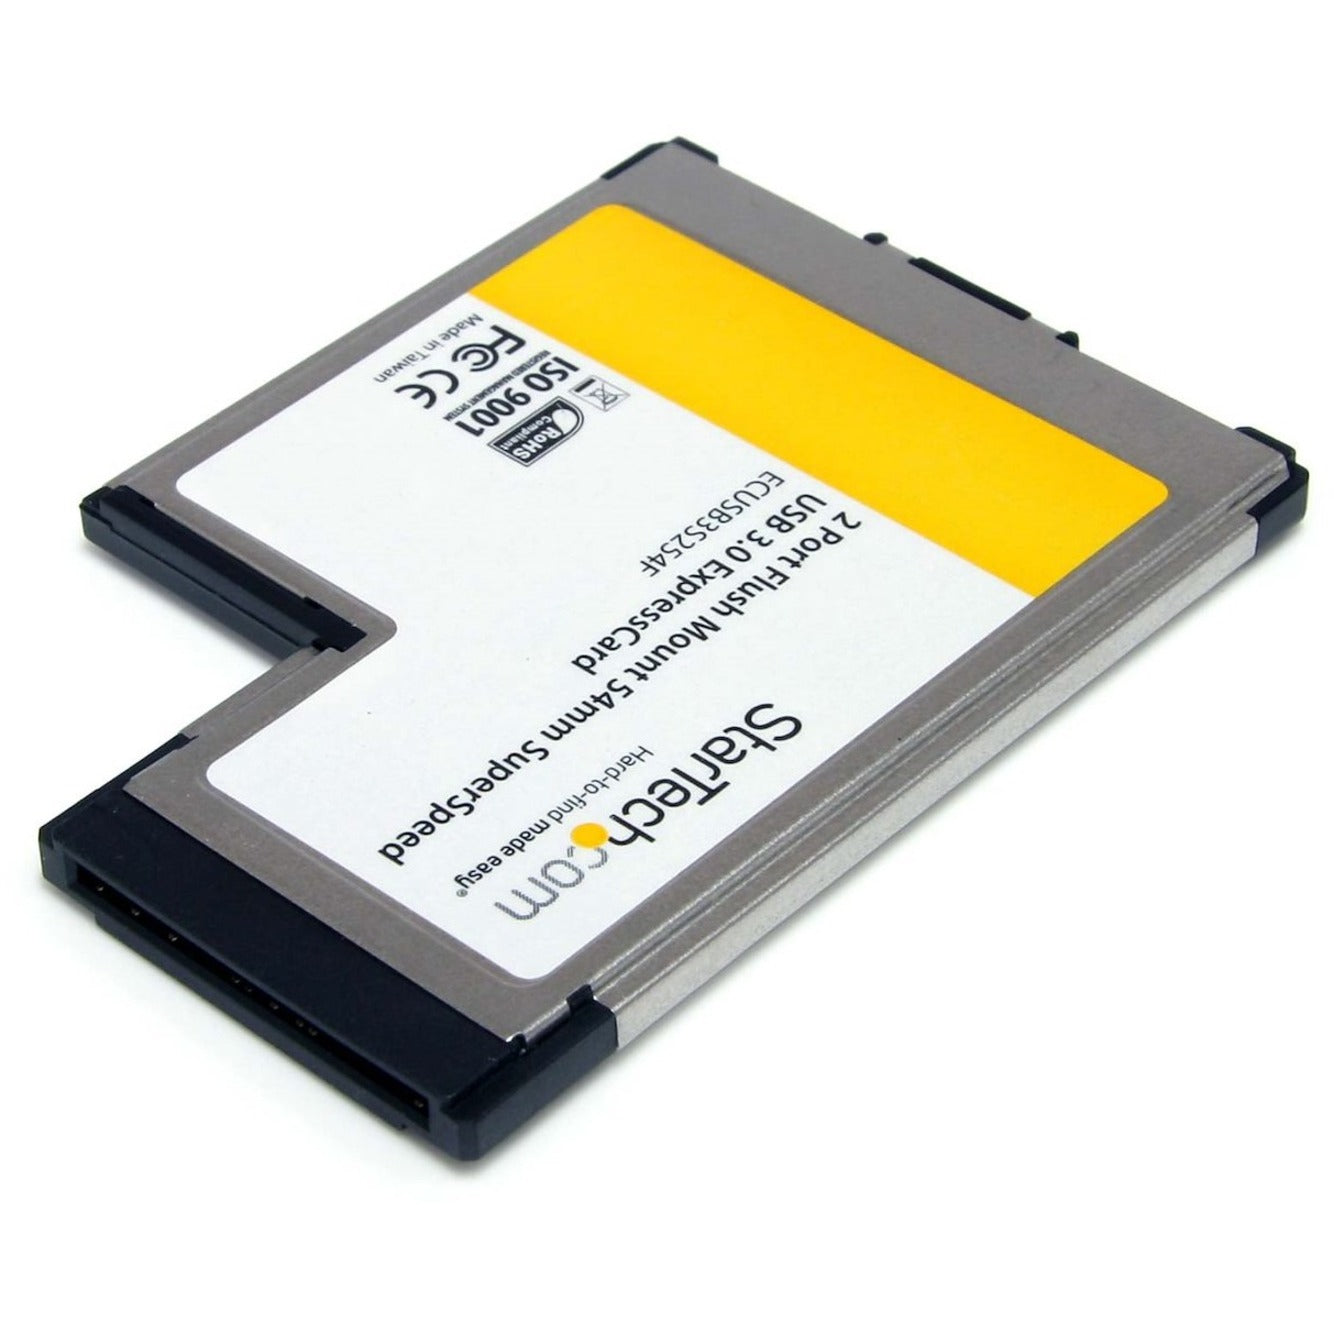 StarTech.com ECUSB3S254F 2 Port Flush Mount ExpressCard 54mm SuperSpeed USB 3.0 Card Adapter, TAA Compliant, 2 Year Warranty